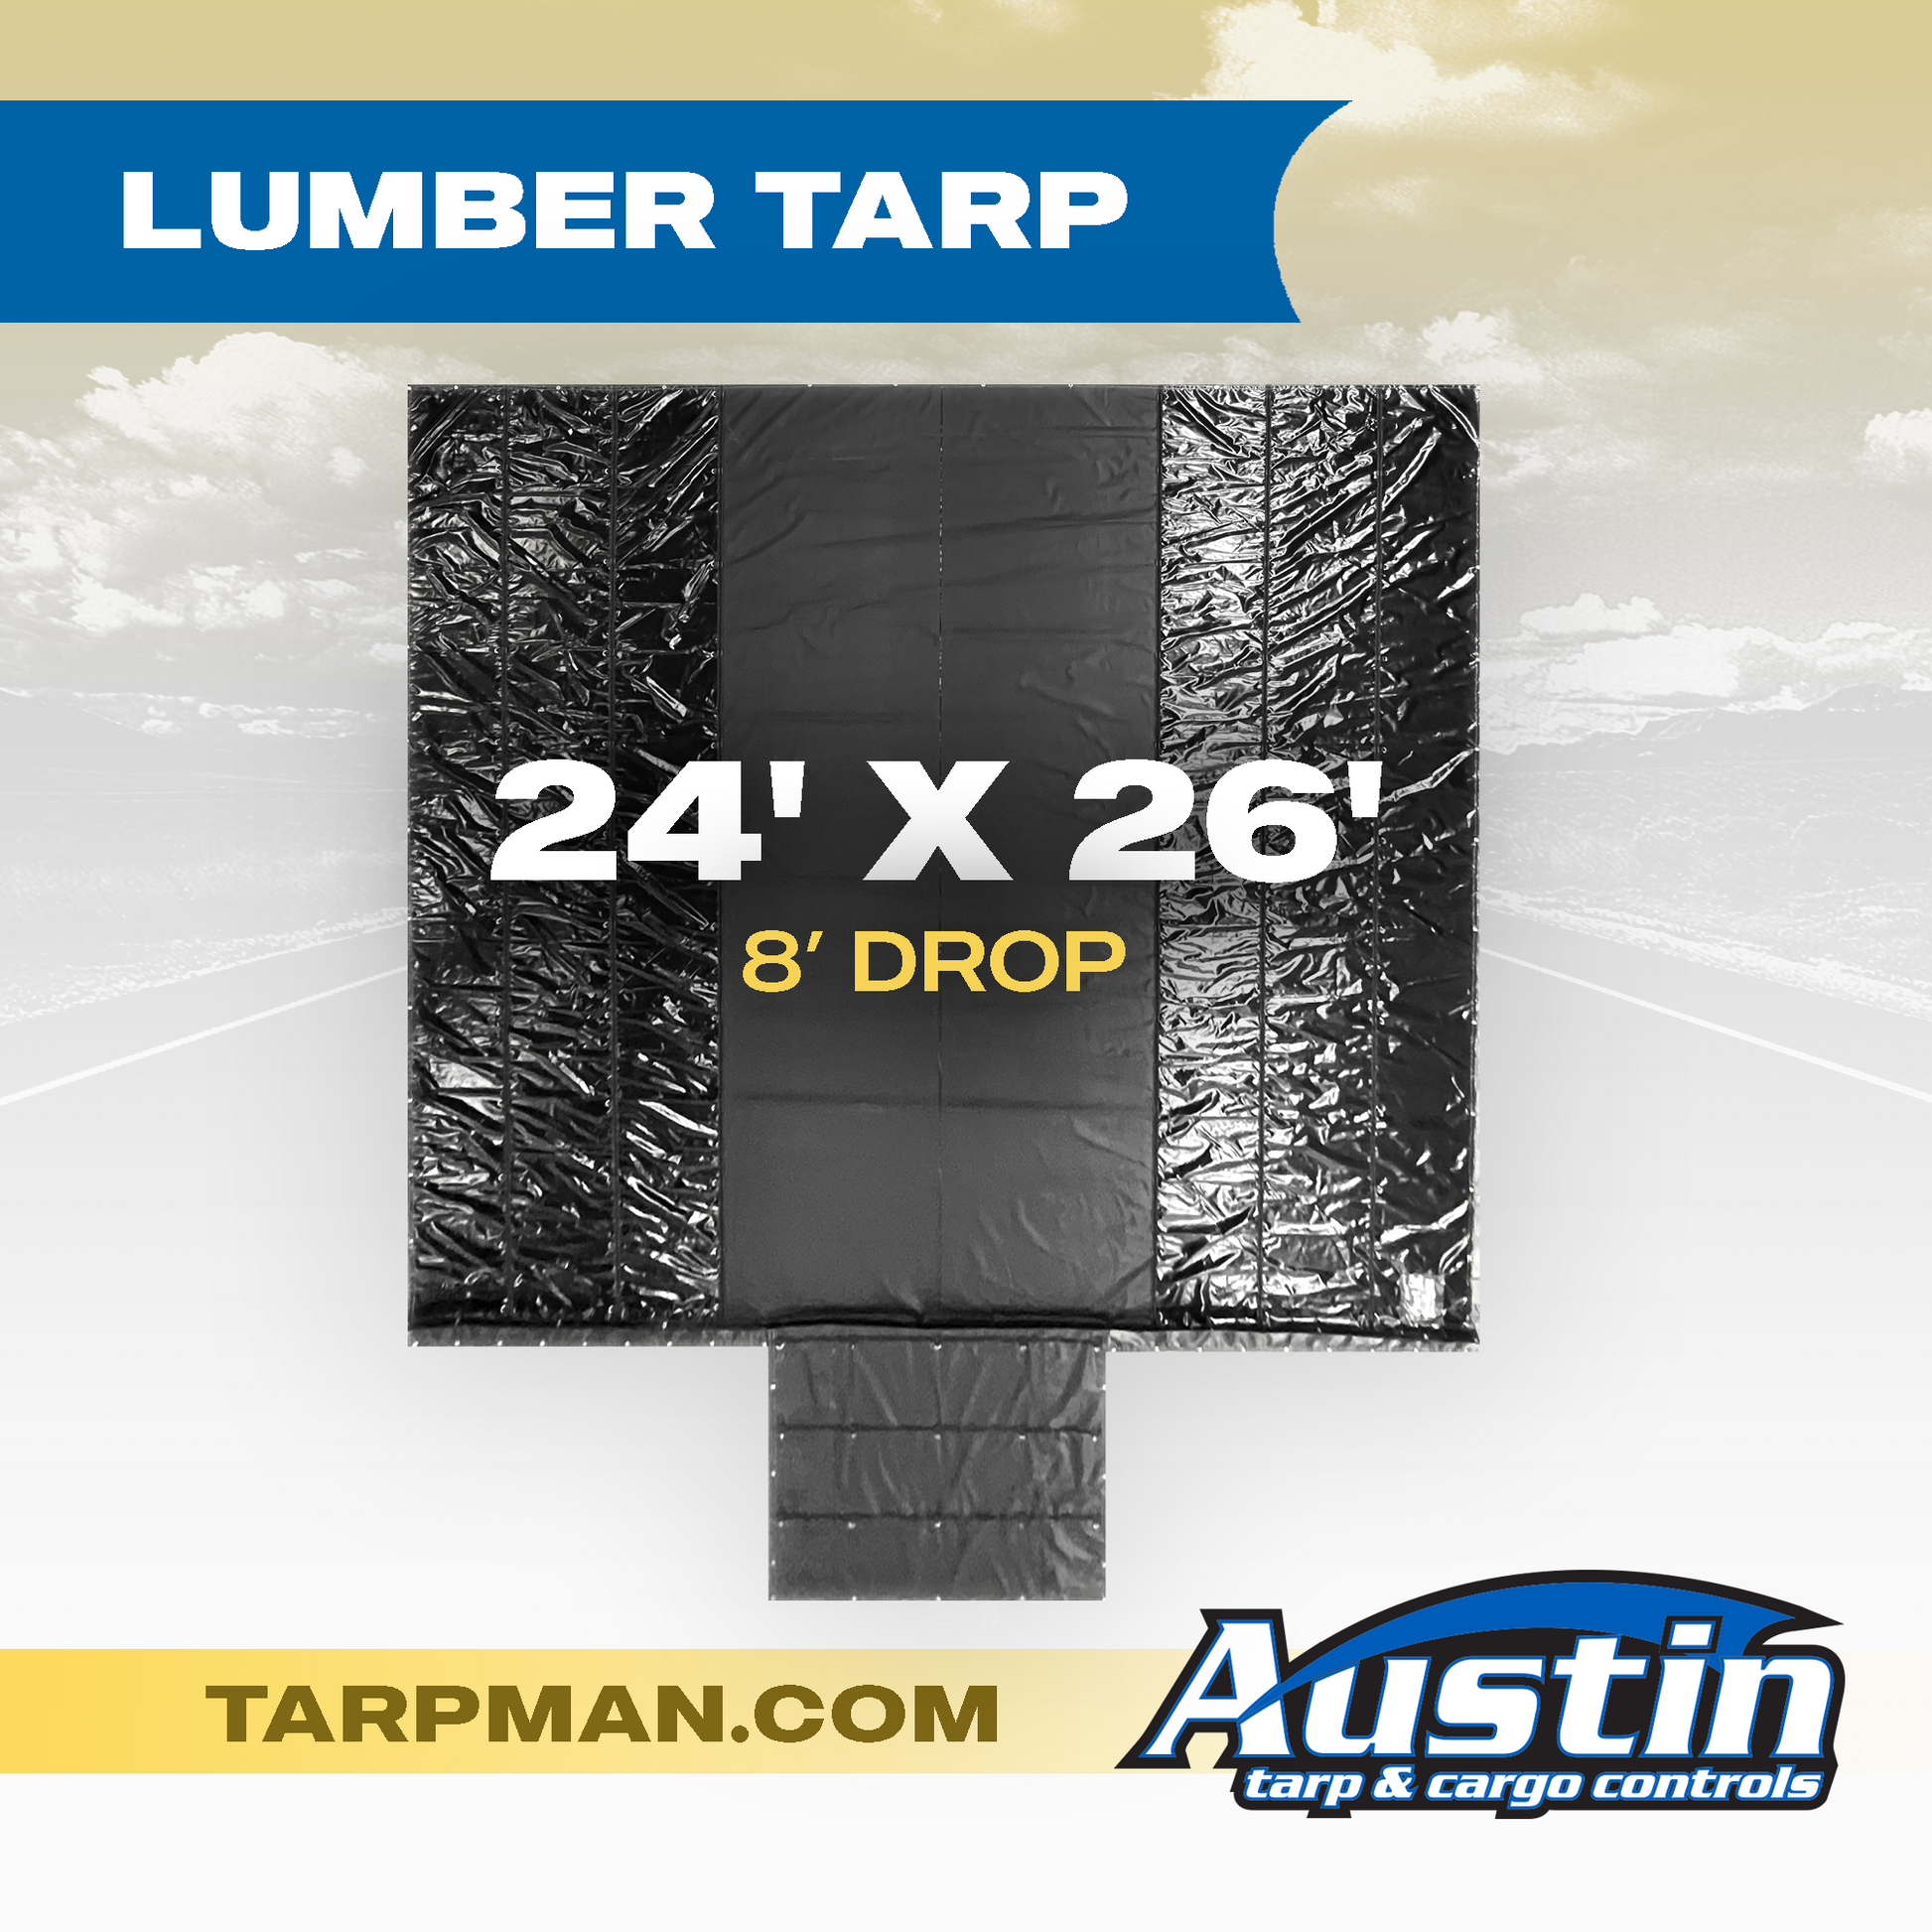 24' X 26' Lightweight Lumber Tarp w/ 3 Rows of D-Rings & End Flap Tarpman.com | Austin Tarp & Cargo Controls